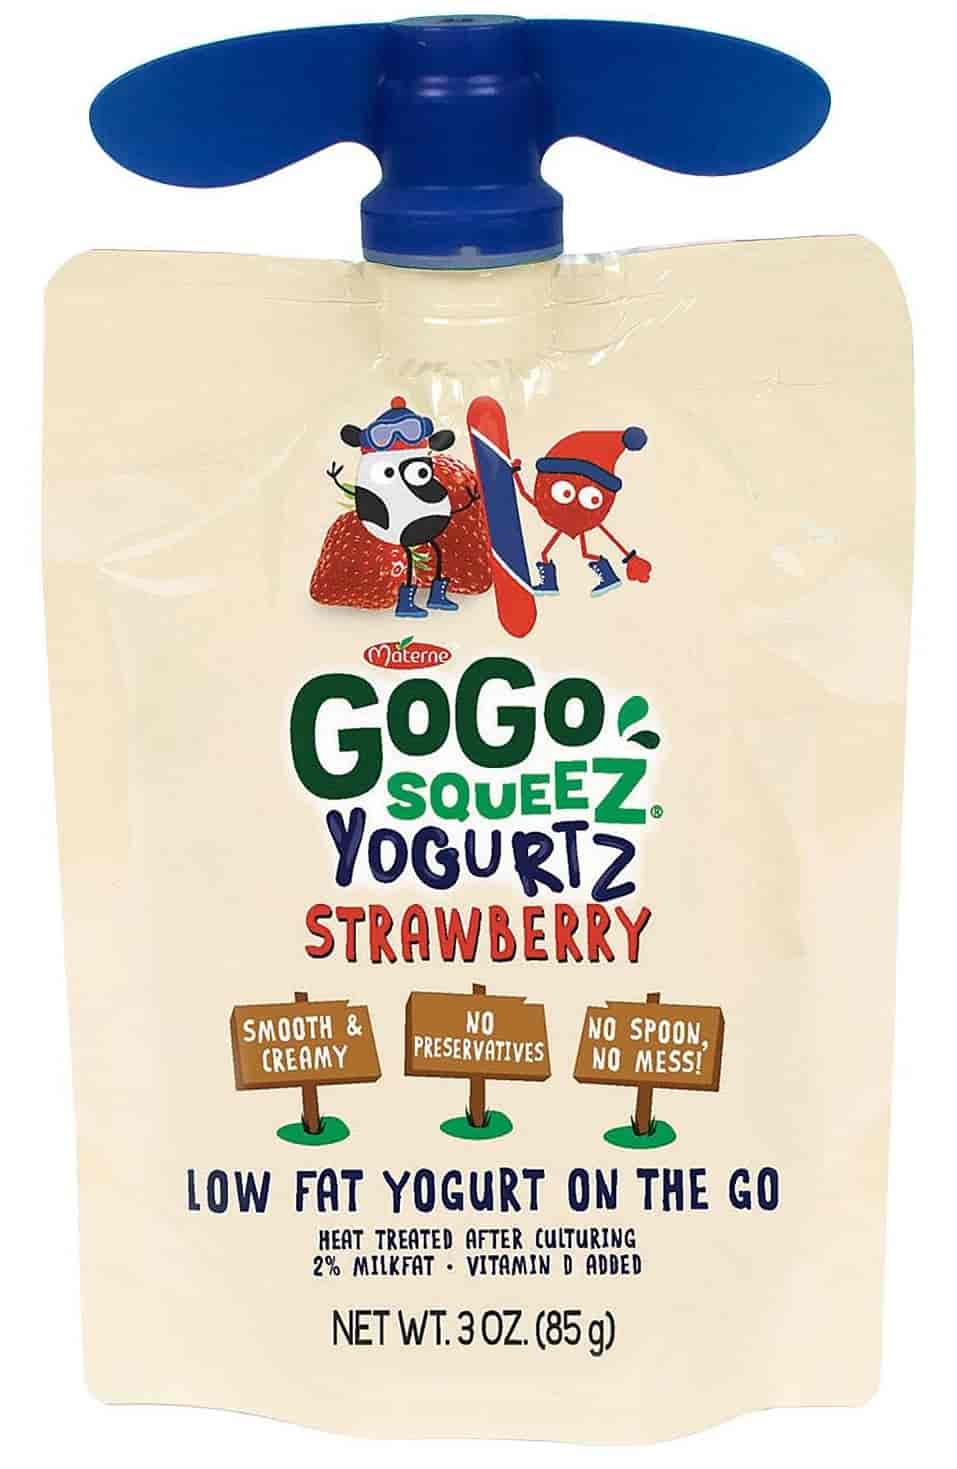 Yogurt Product